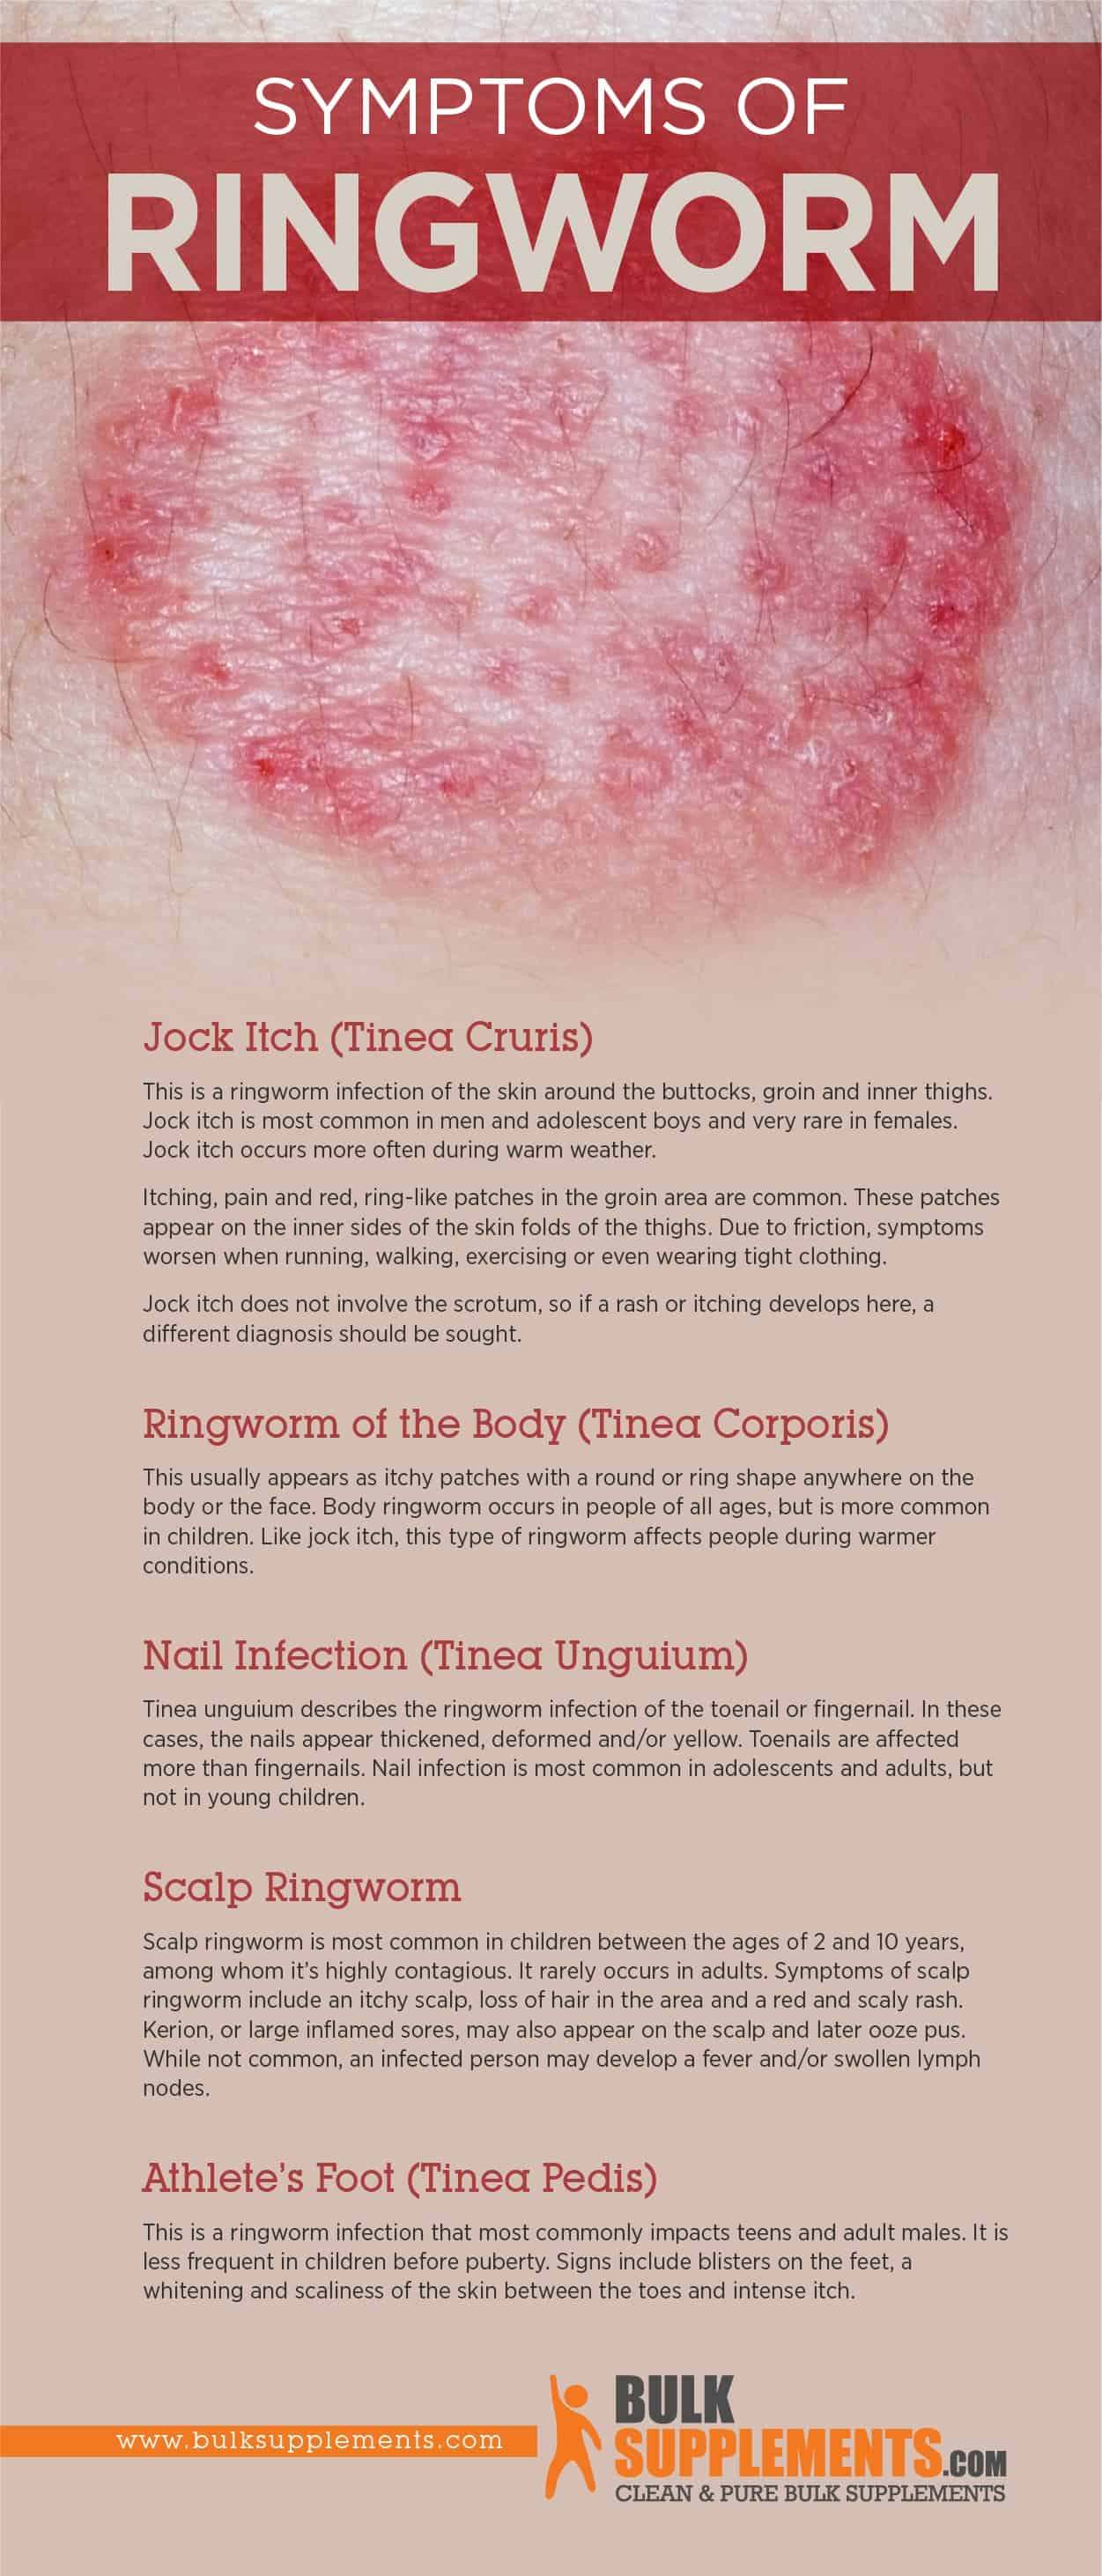 Symptoms of Ringworm